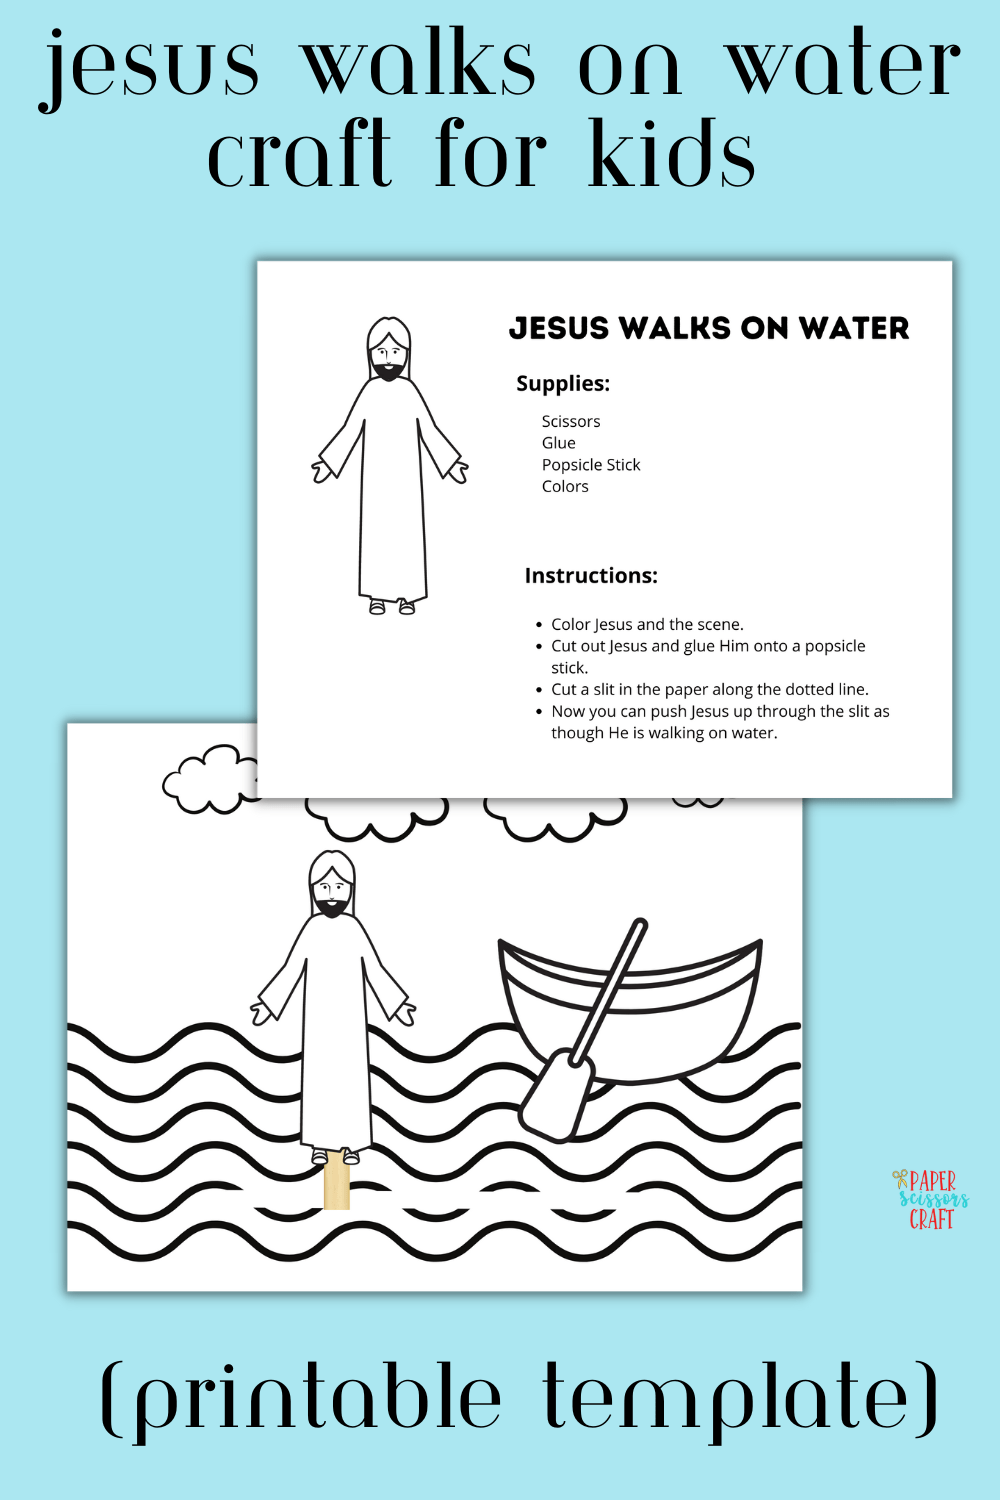 Jesus walks on water template instructions.